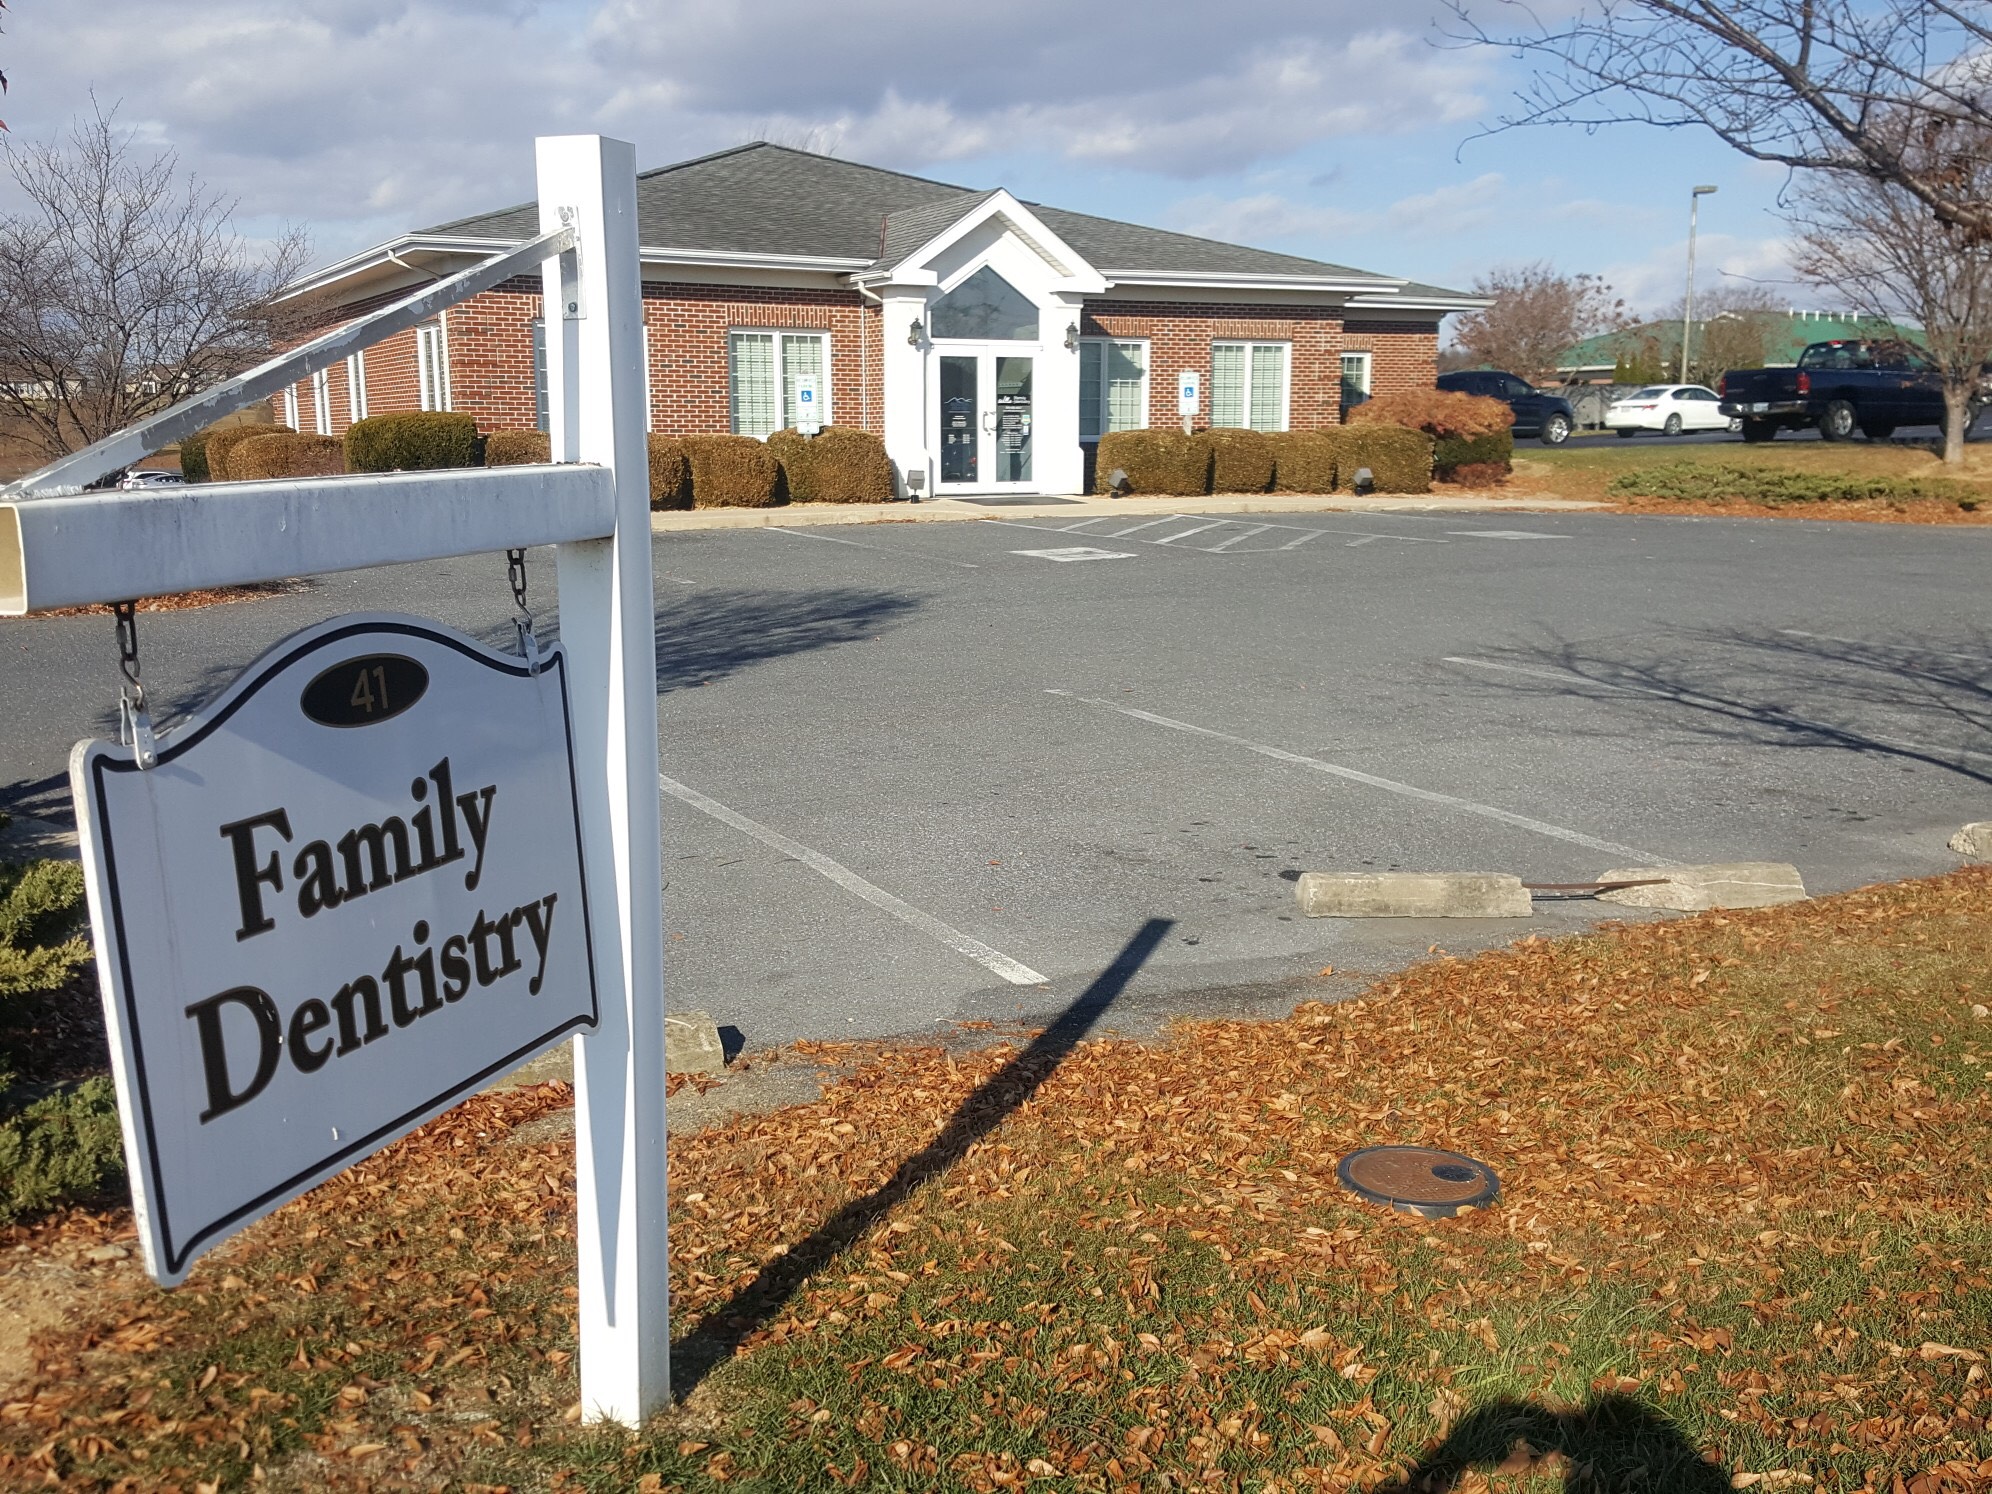 Augusta Dental: Adam J. Salzberg, DDS. 41 S Medical Park Dr #110, Fishersville Virginia 22939